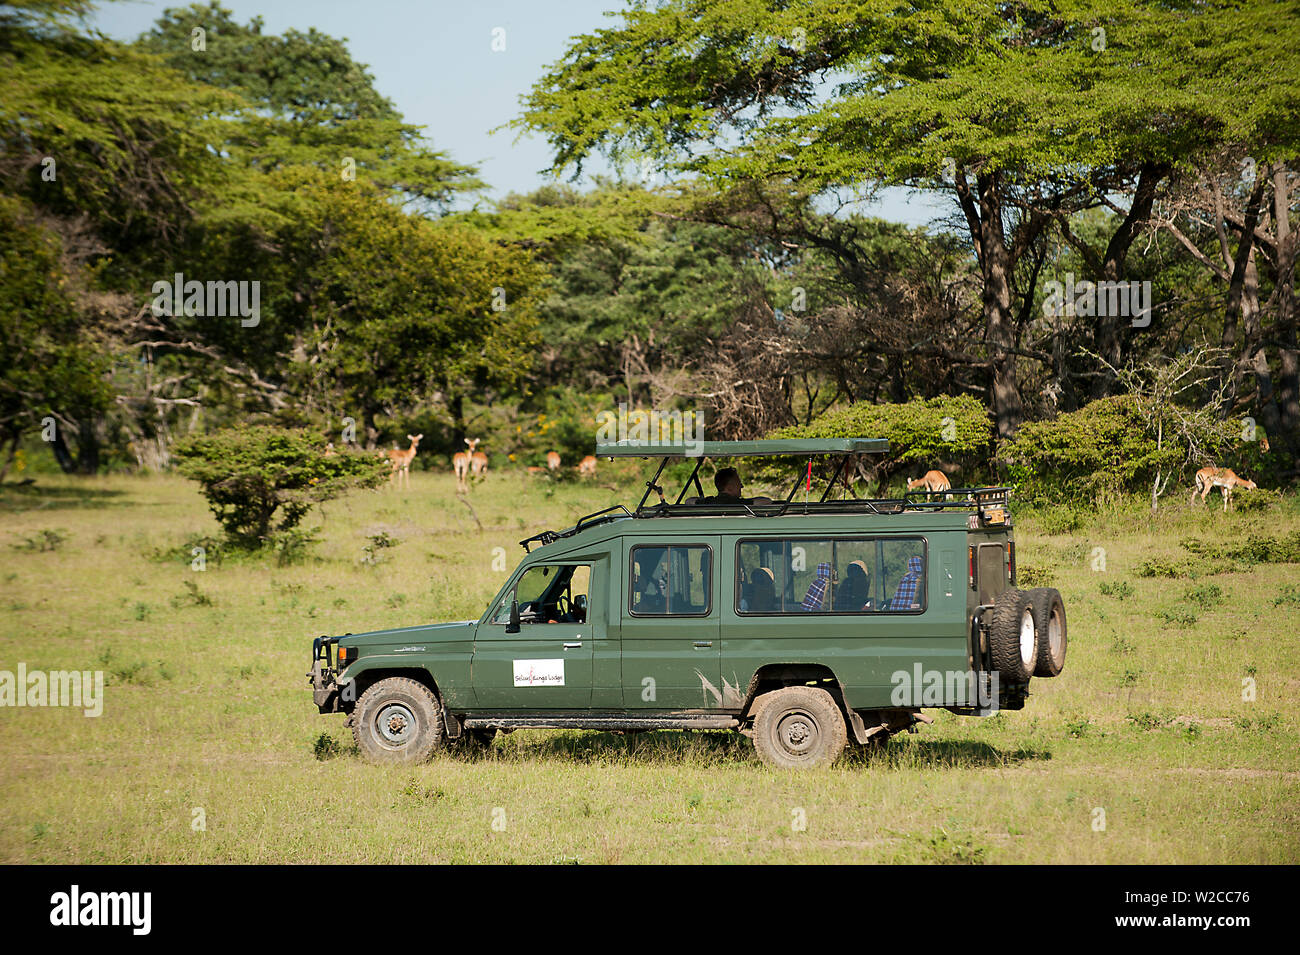 Safari vehicle with tourist and wildlife in Selous Game Reserve, Tanzania Stock Photo